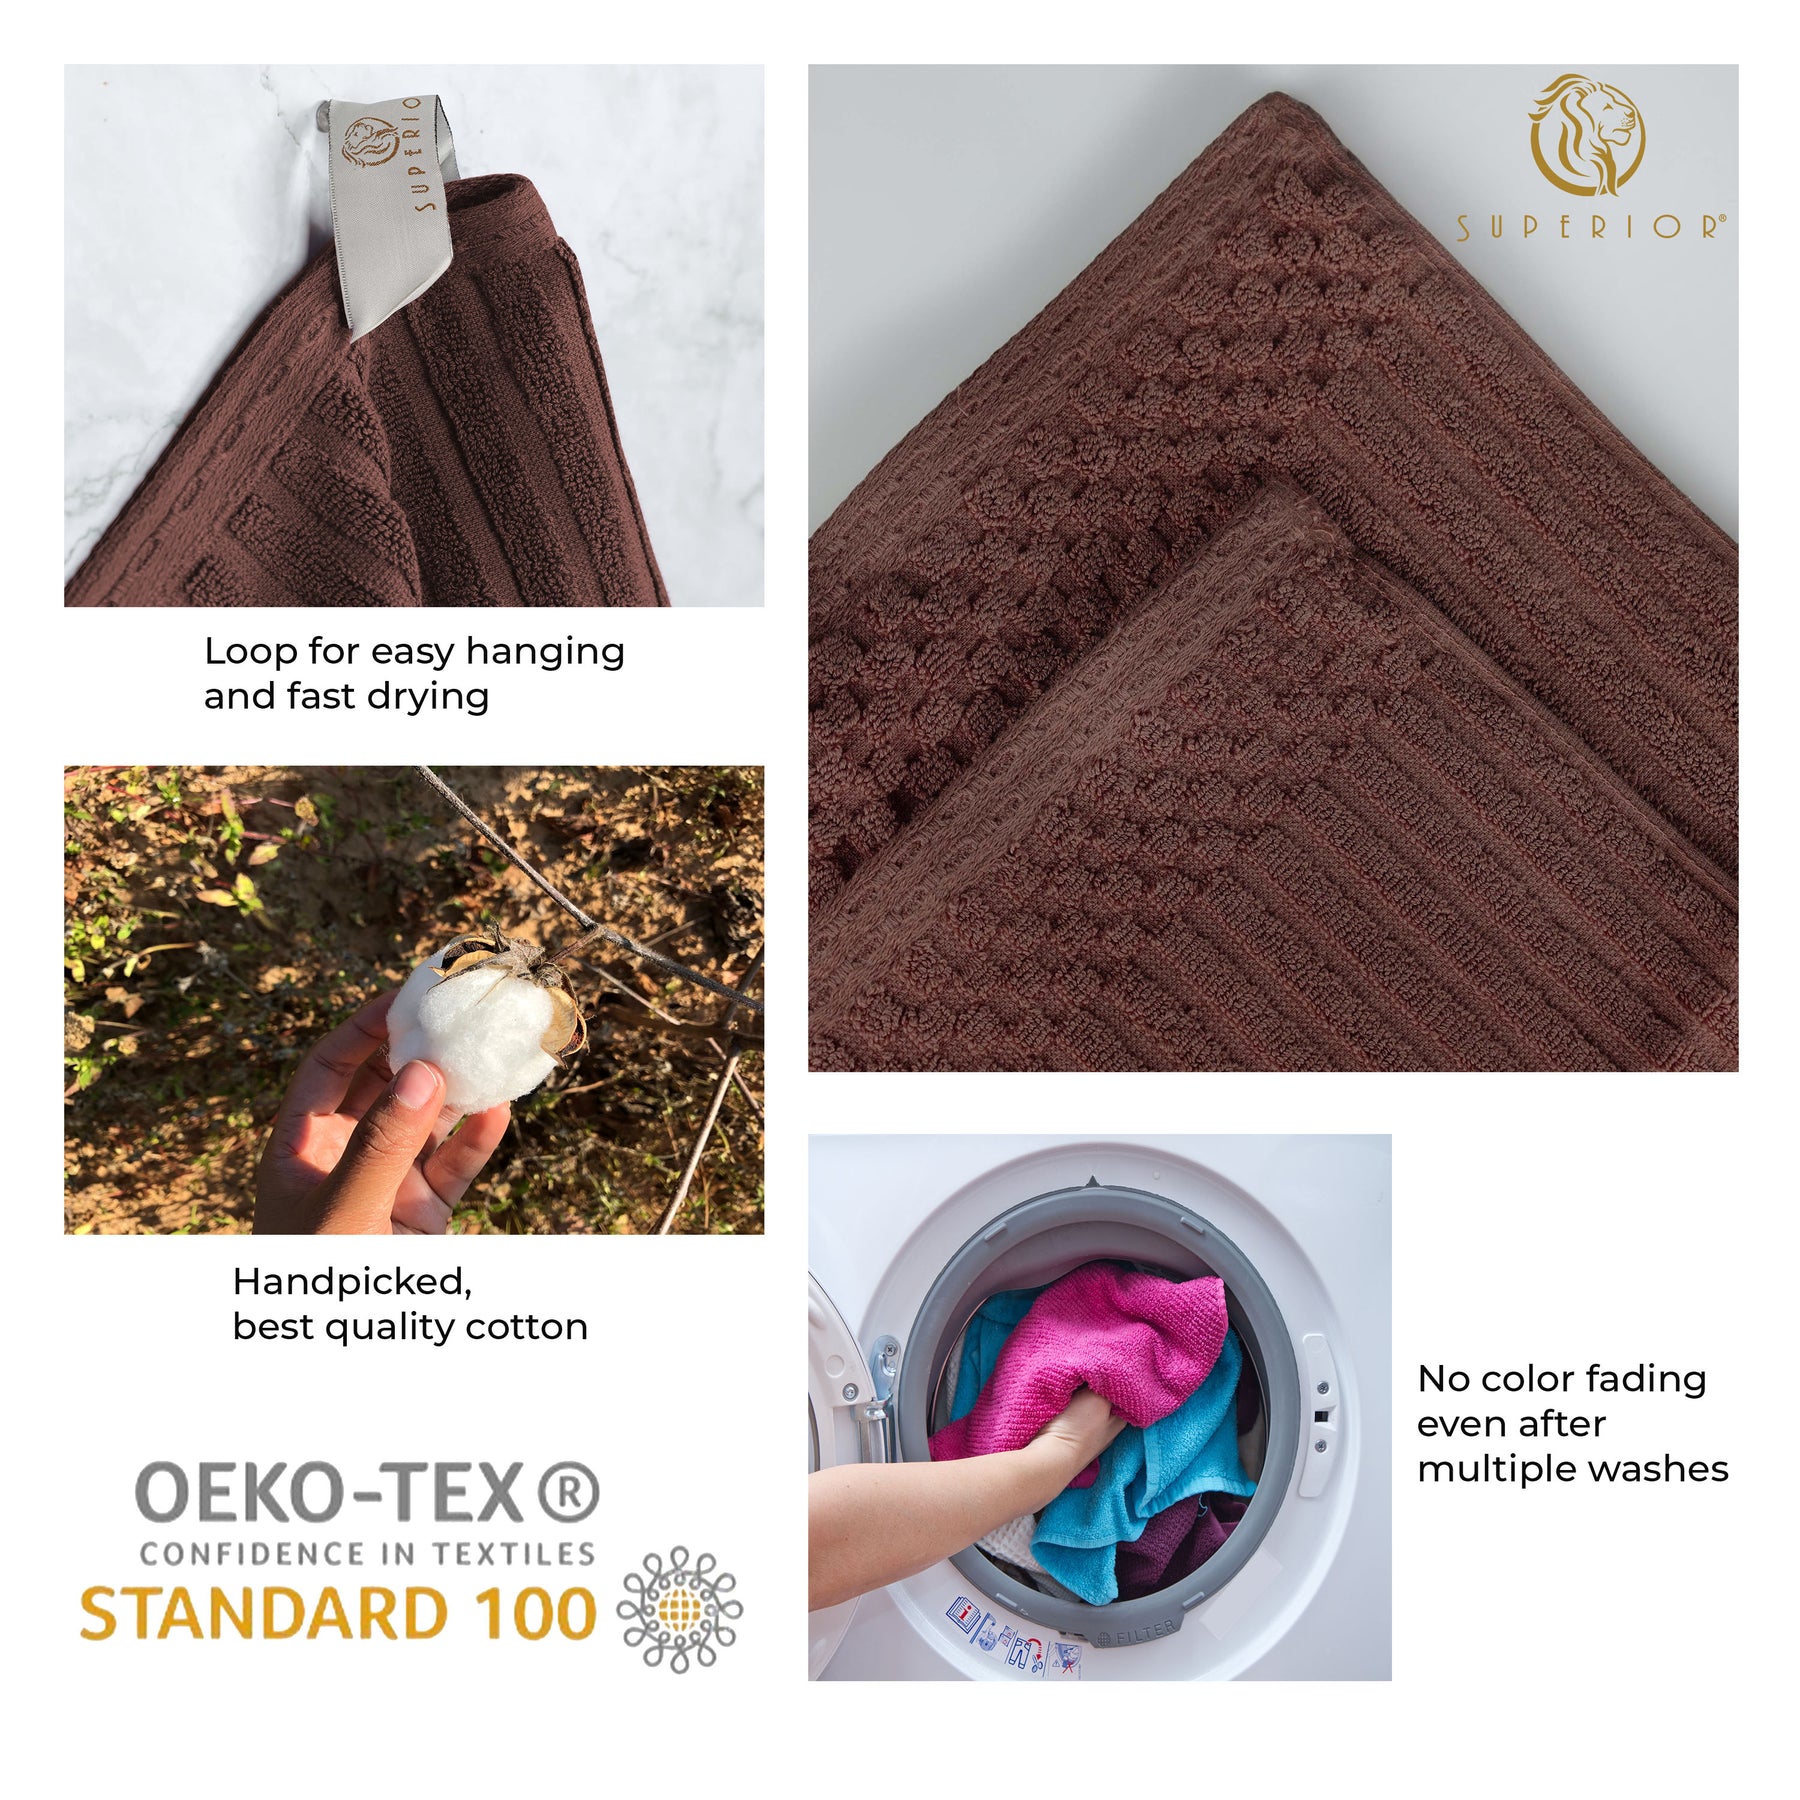 Superior Soho Ribbed Textured Cotton Ultra-Absorbent Bath Sheet & Bath Towel Set - Java